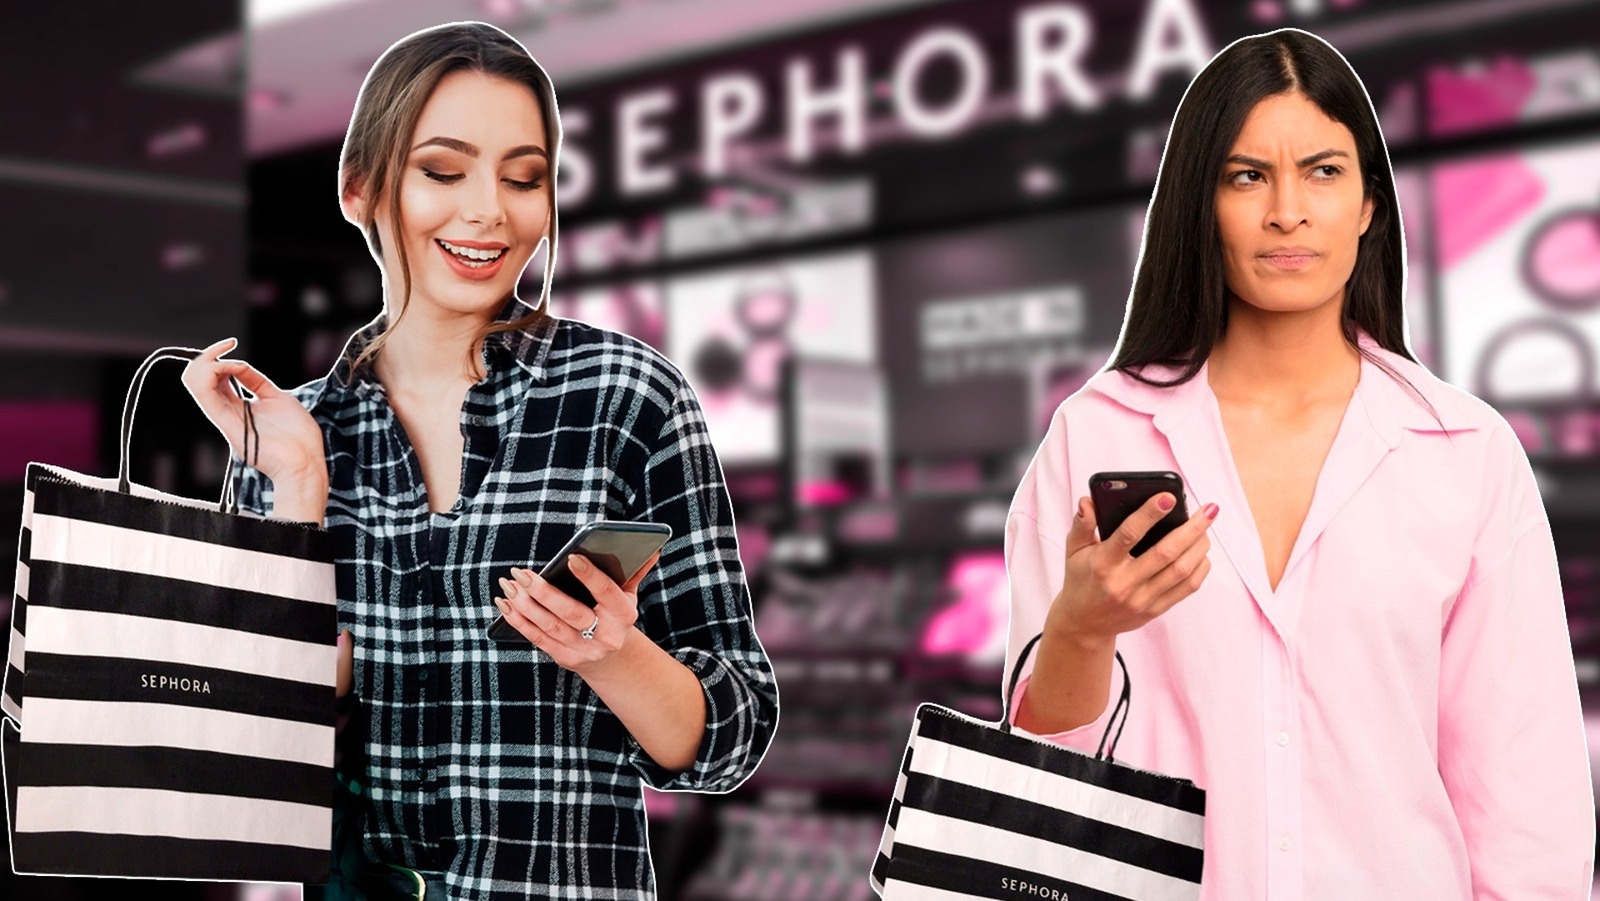 Sephora Rewards Bazaar: Is Loyalty Worth the Price?